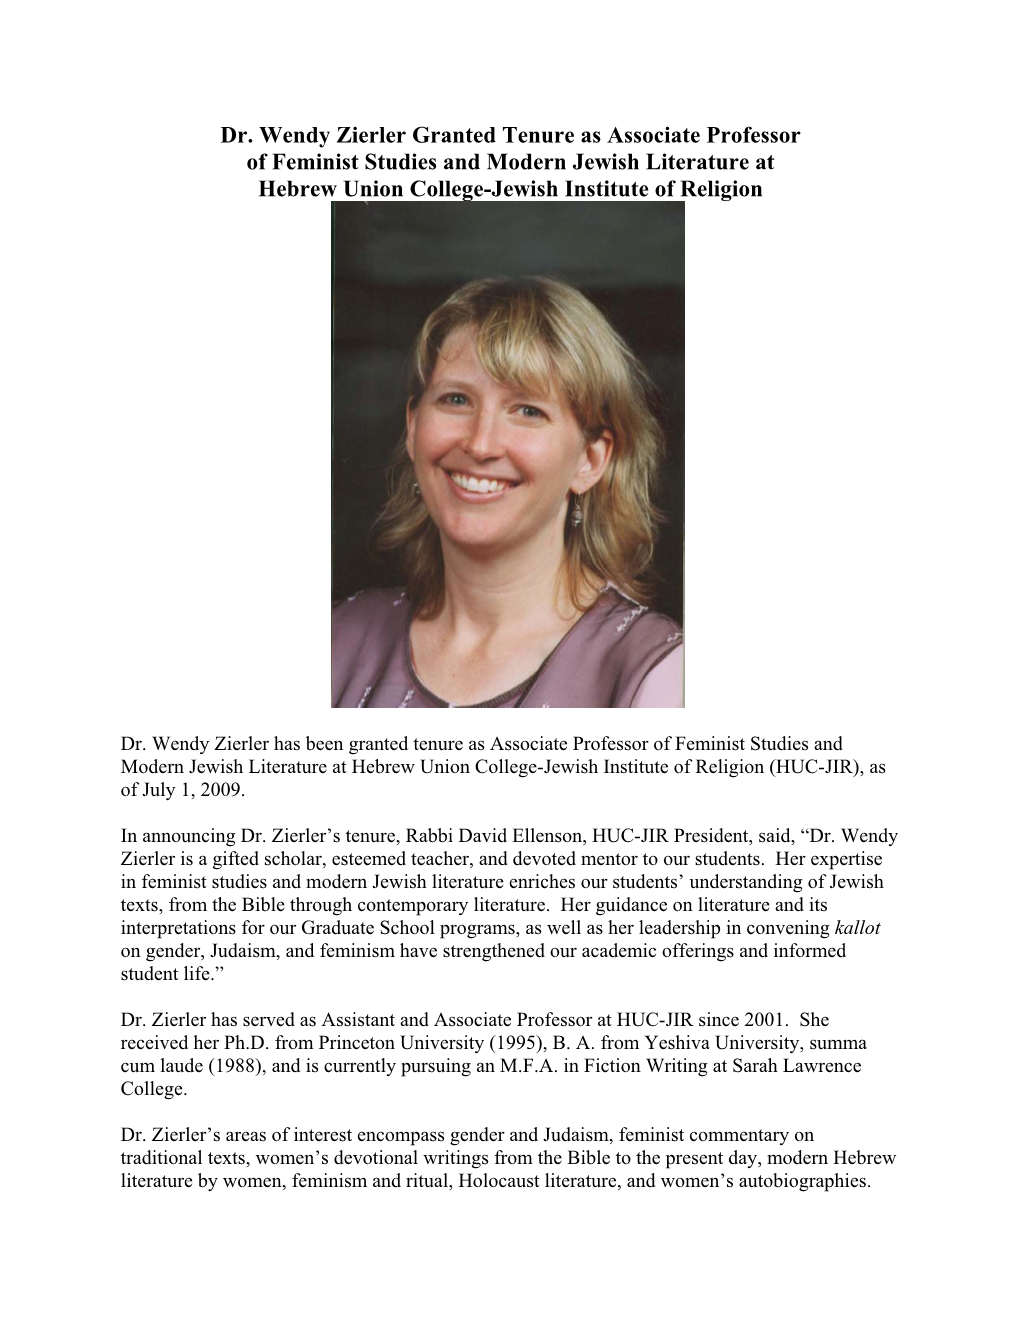 Dr. Wendy Zierler Granted Tenure As Associate Professor of Feminist Studies and Modern Jewish Literature at Hebrew Union College-Jewish Institute of Religion